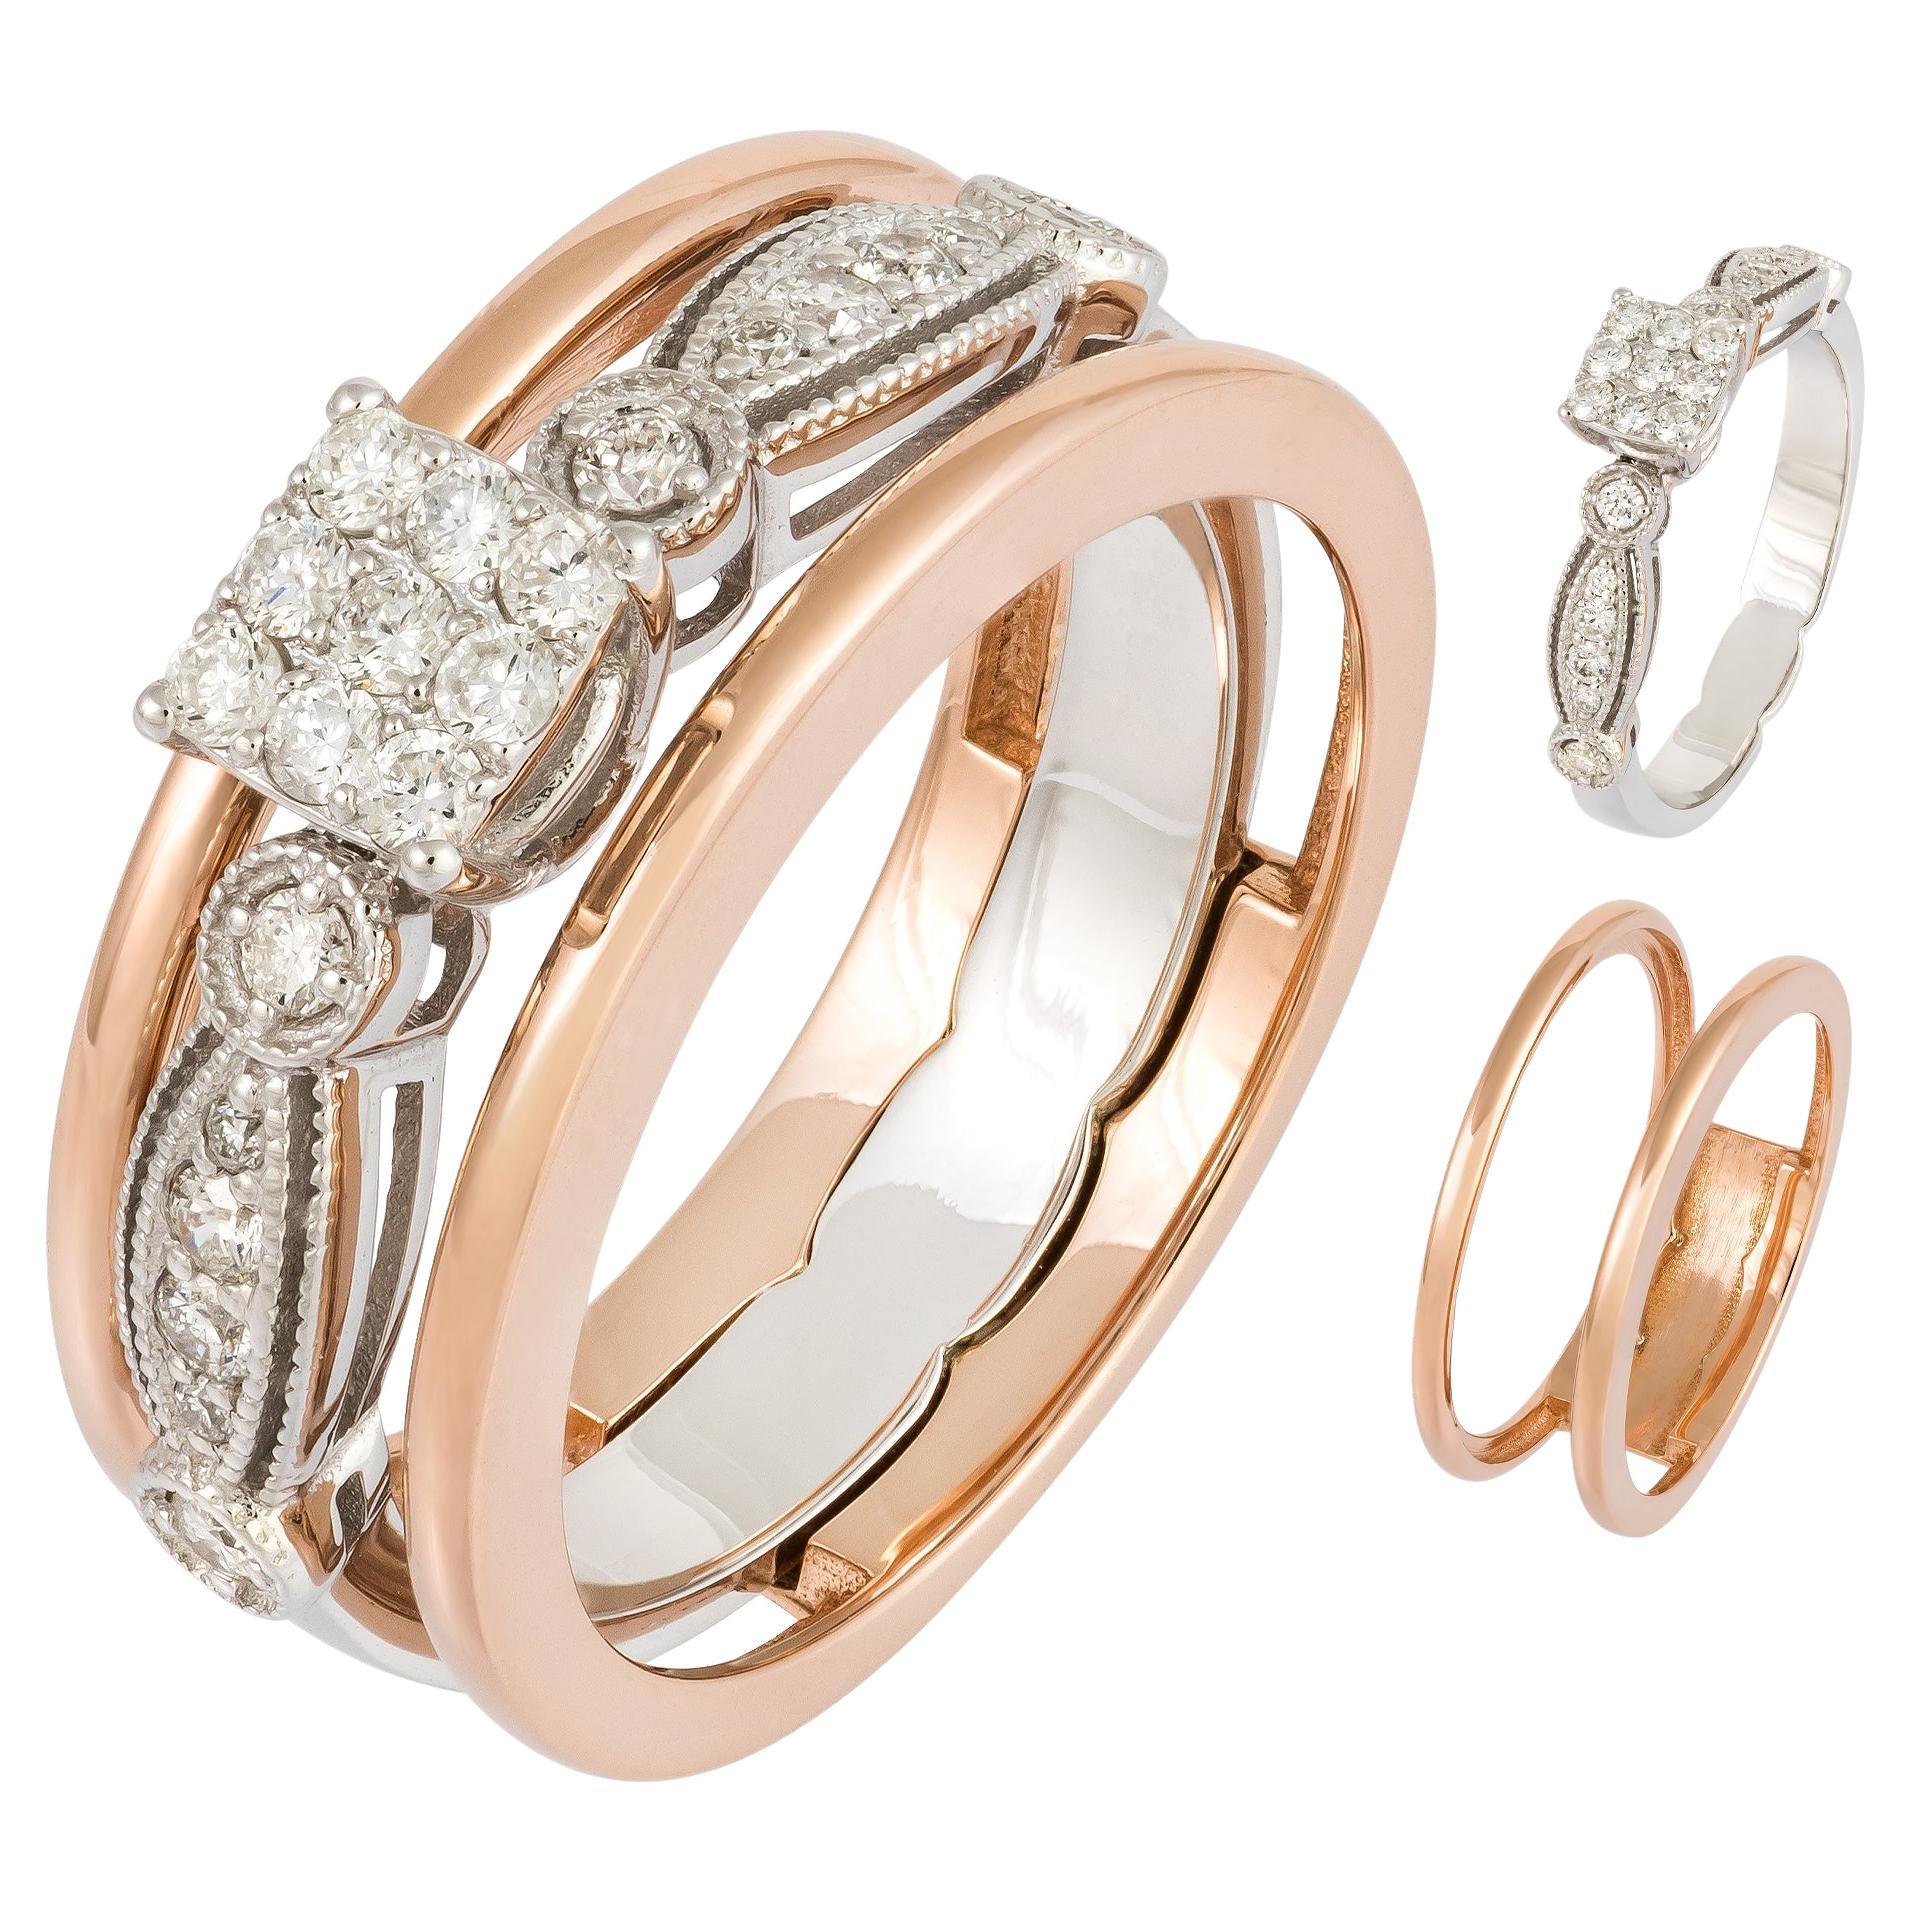 For Sale:  Impressive White Pink 18K Gold White Diamond Ring for Her